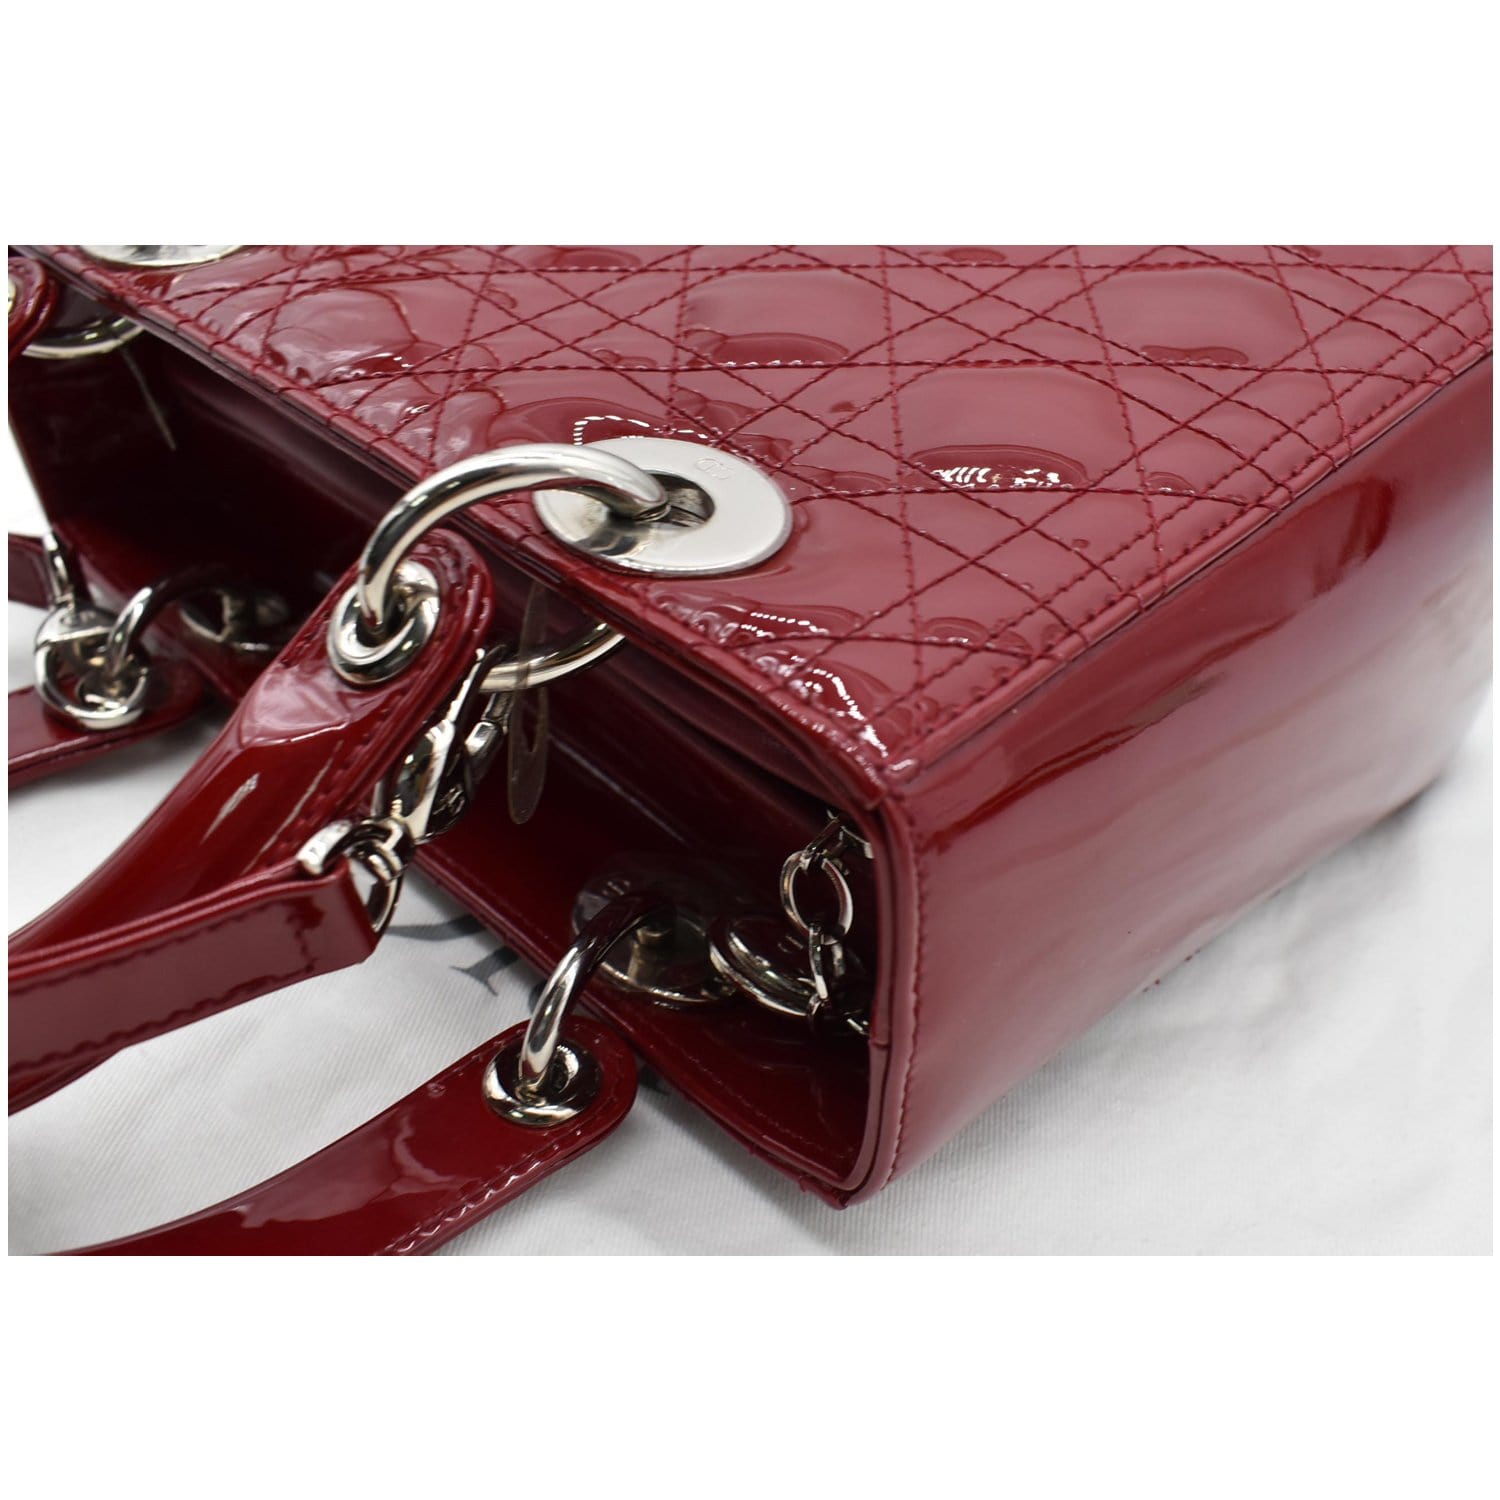 Christian Dior Patent Micro Cannage Medium Lady Dior - Silver Handle Bags,  Handbags - CHR325711